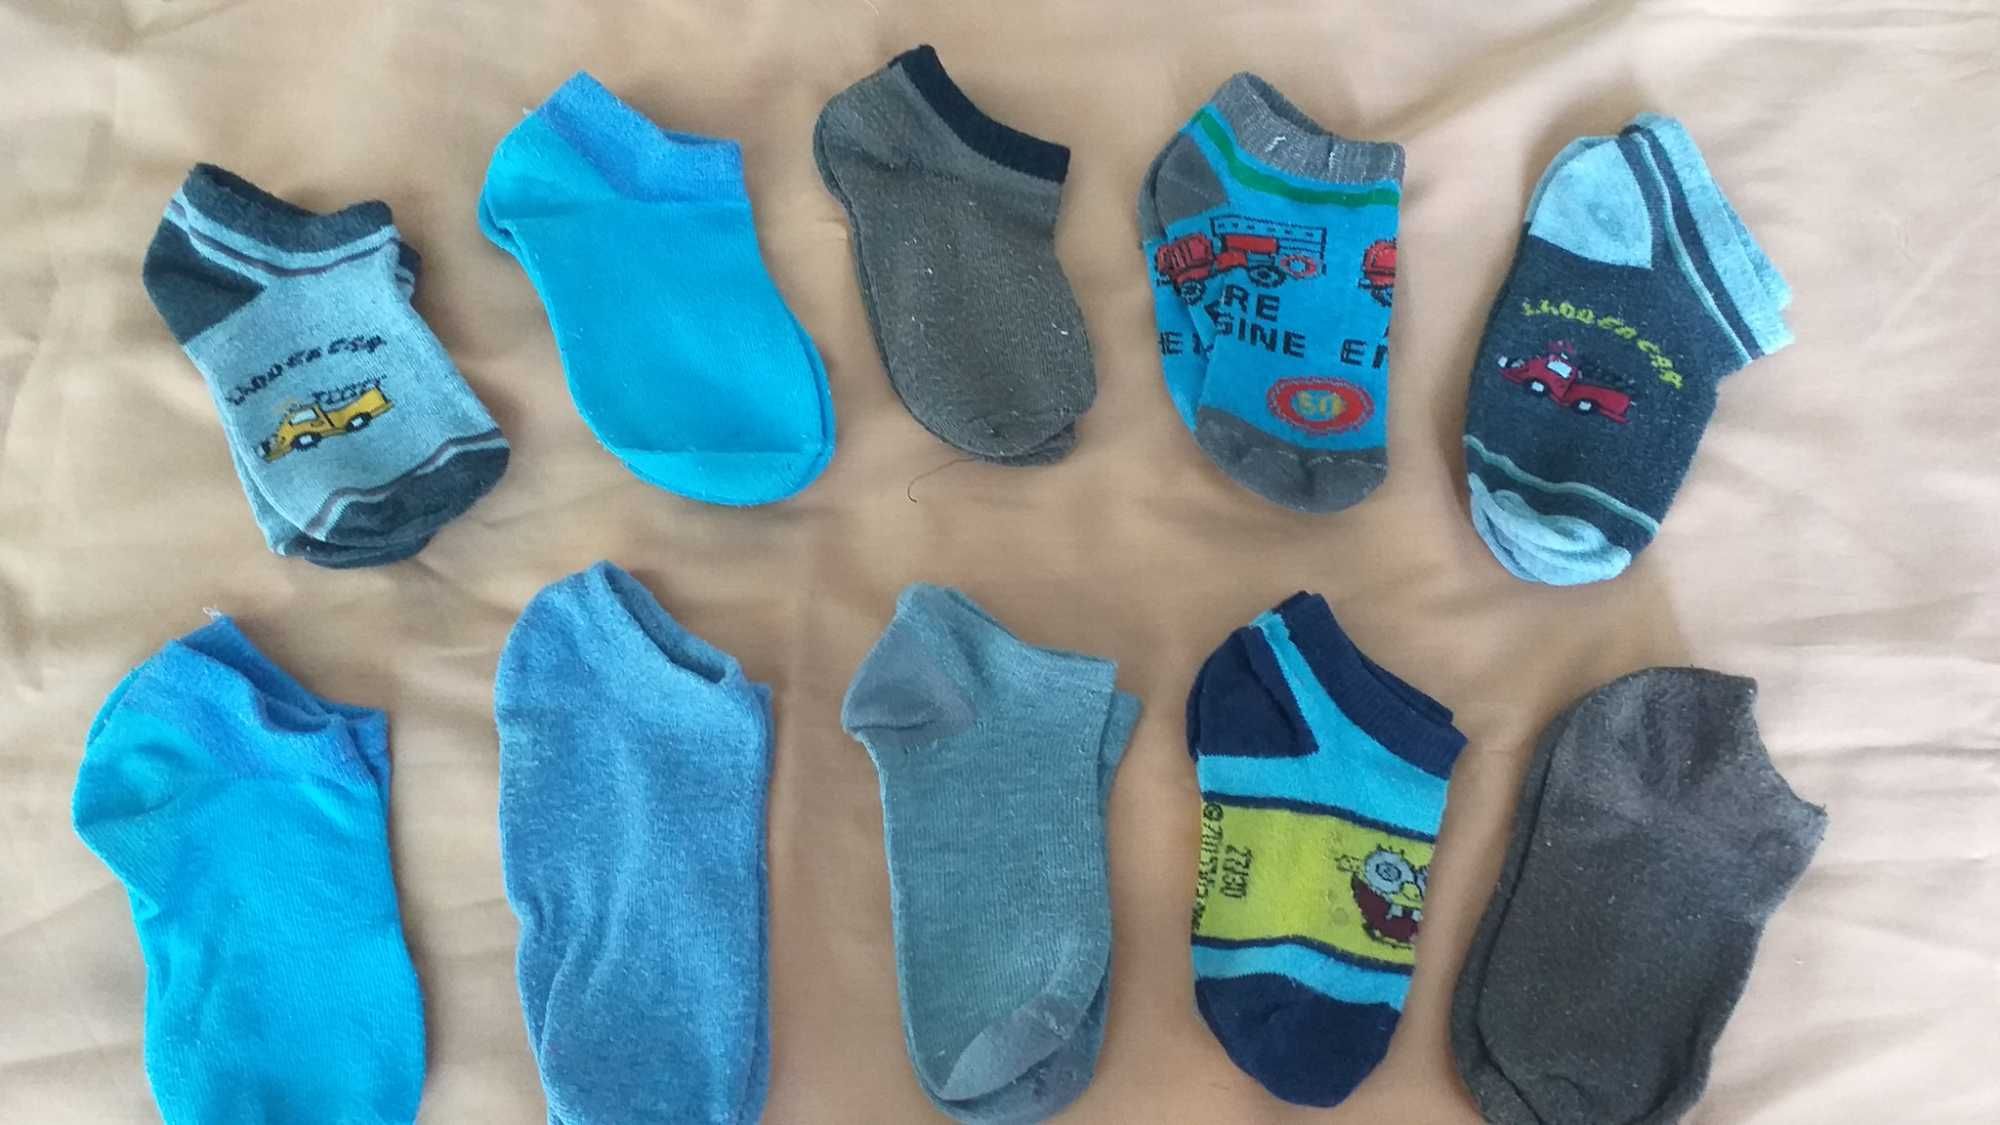 Детски чорапи, боксерки, гащички, потнижи и всичко за момче.-15-25лв.